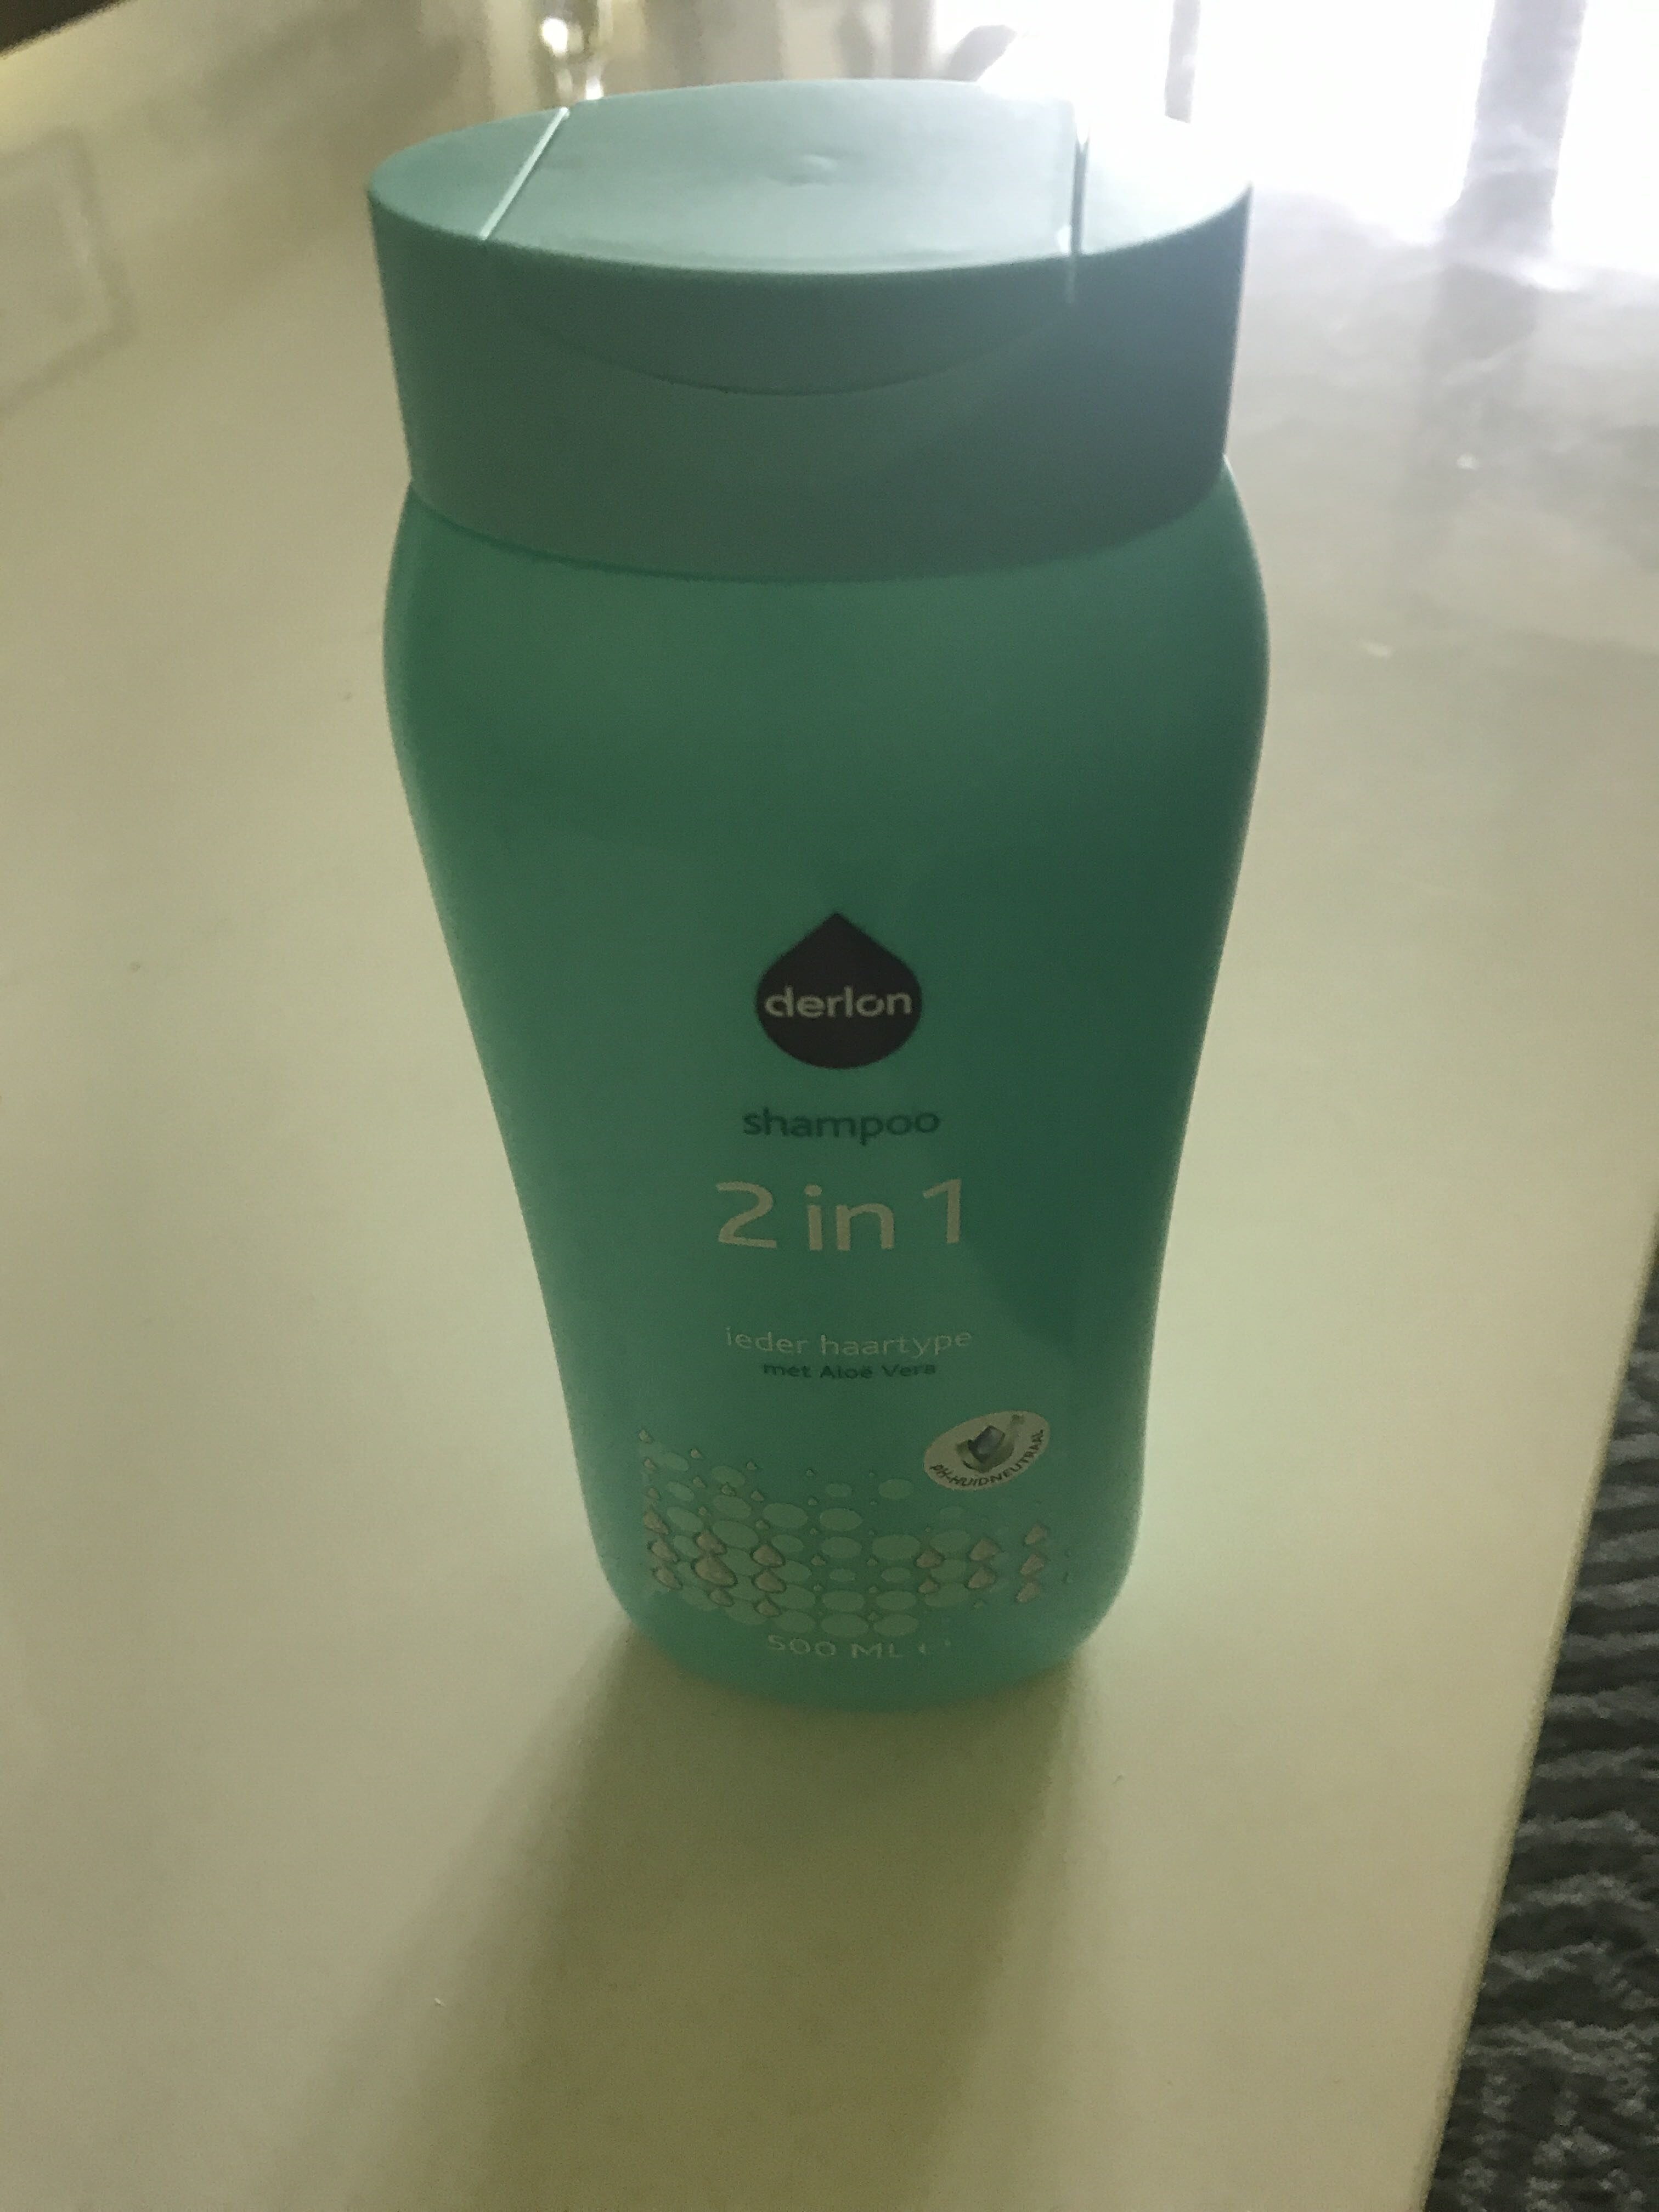 Shampoo 2 in 1 (aloe vera) - Product - en